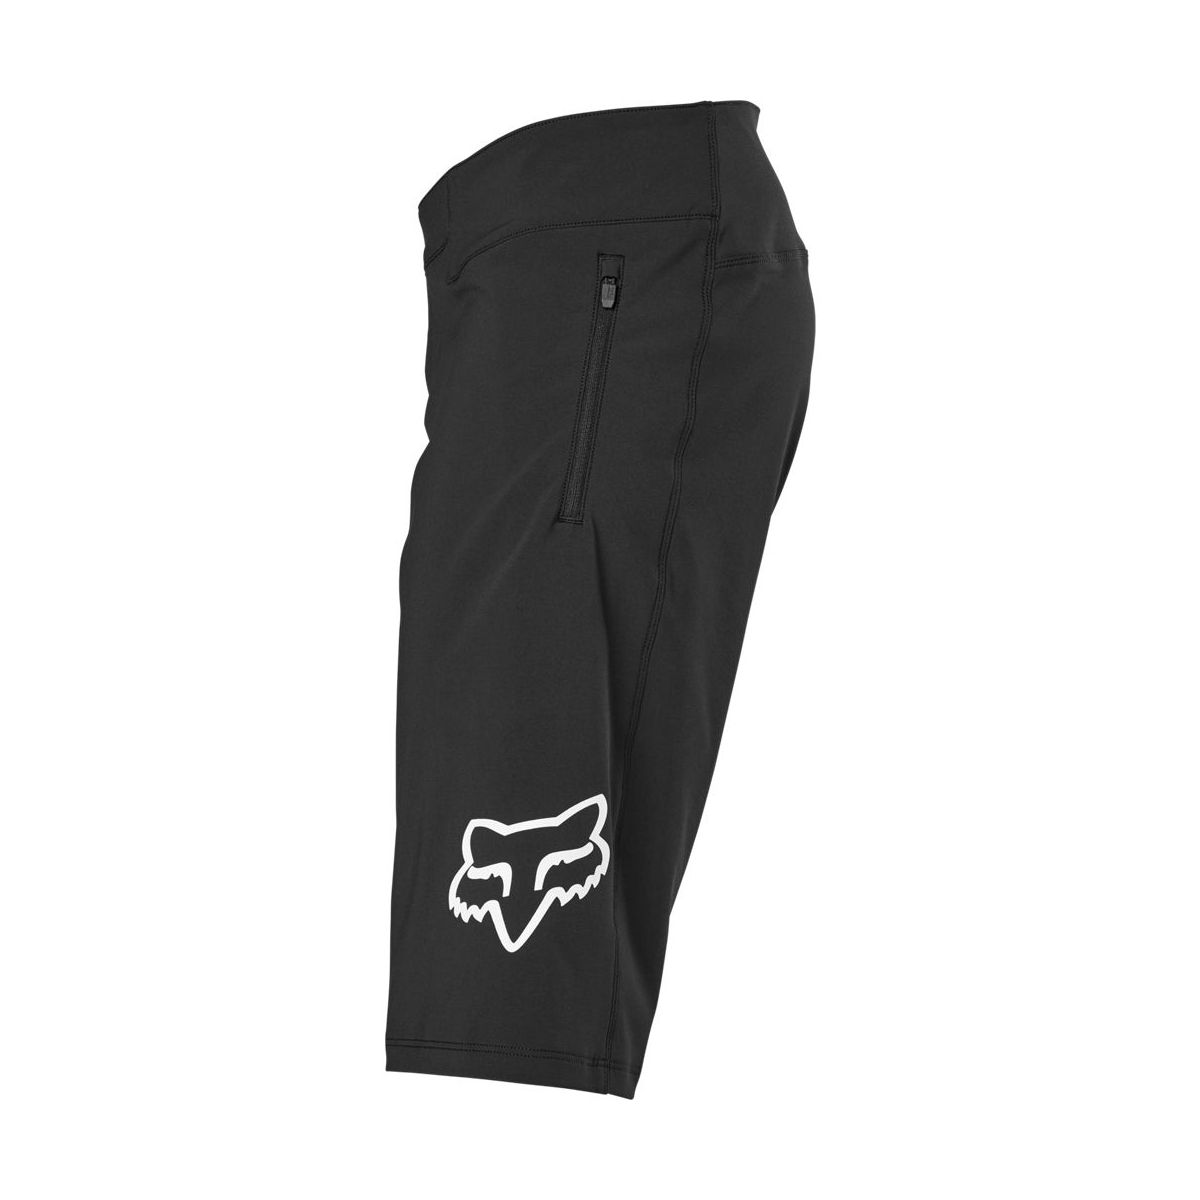 Pantalón corto MTB Enduro Fox Defend con cremallera sin badana color negro | FOX RACING ESPAÑA | The Bike Village